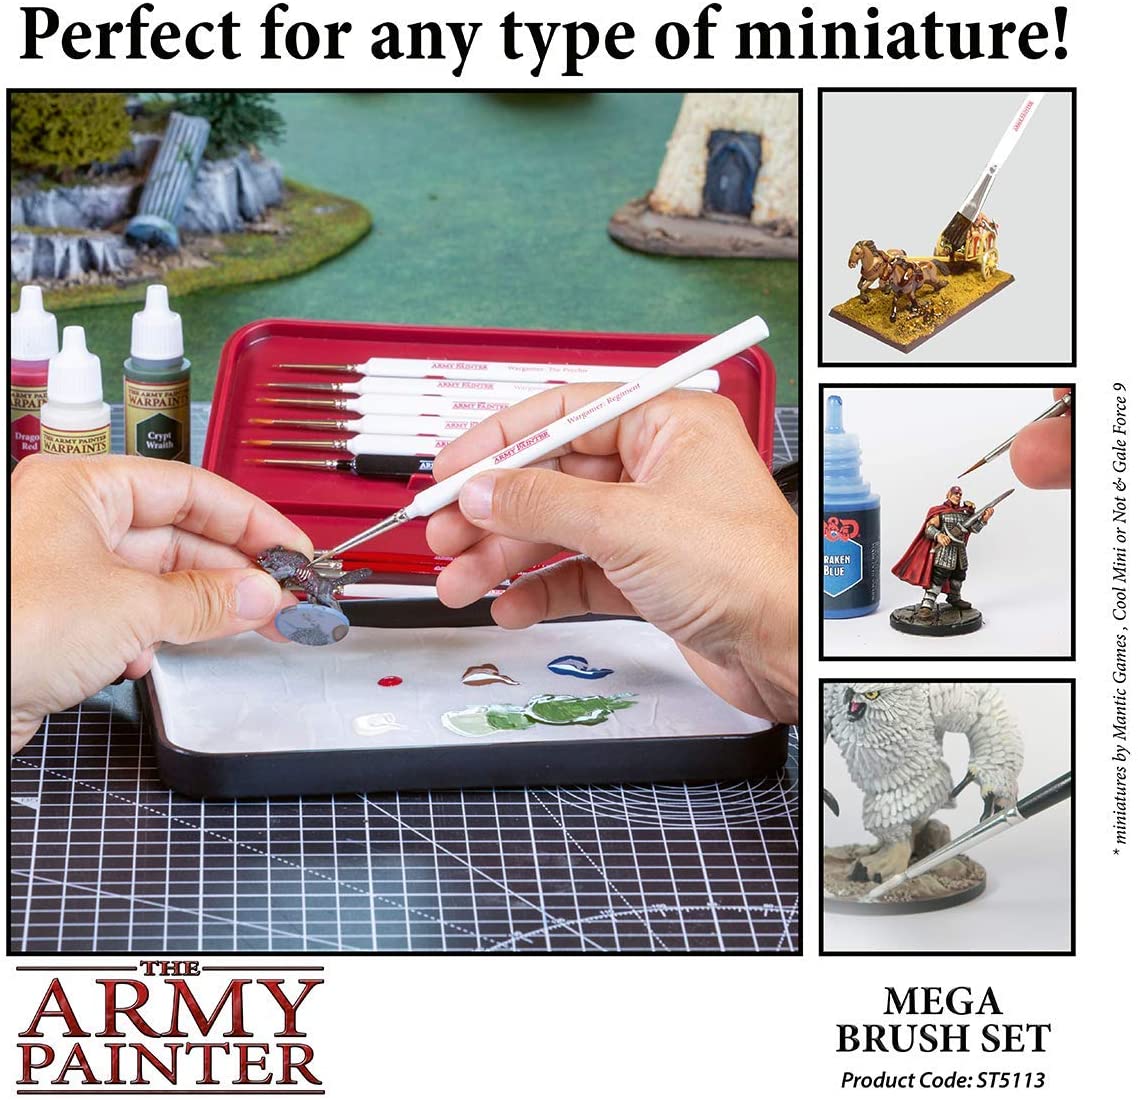 Army Painter Masterclass Drybrush Set Review